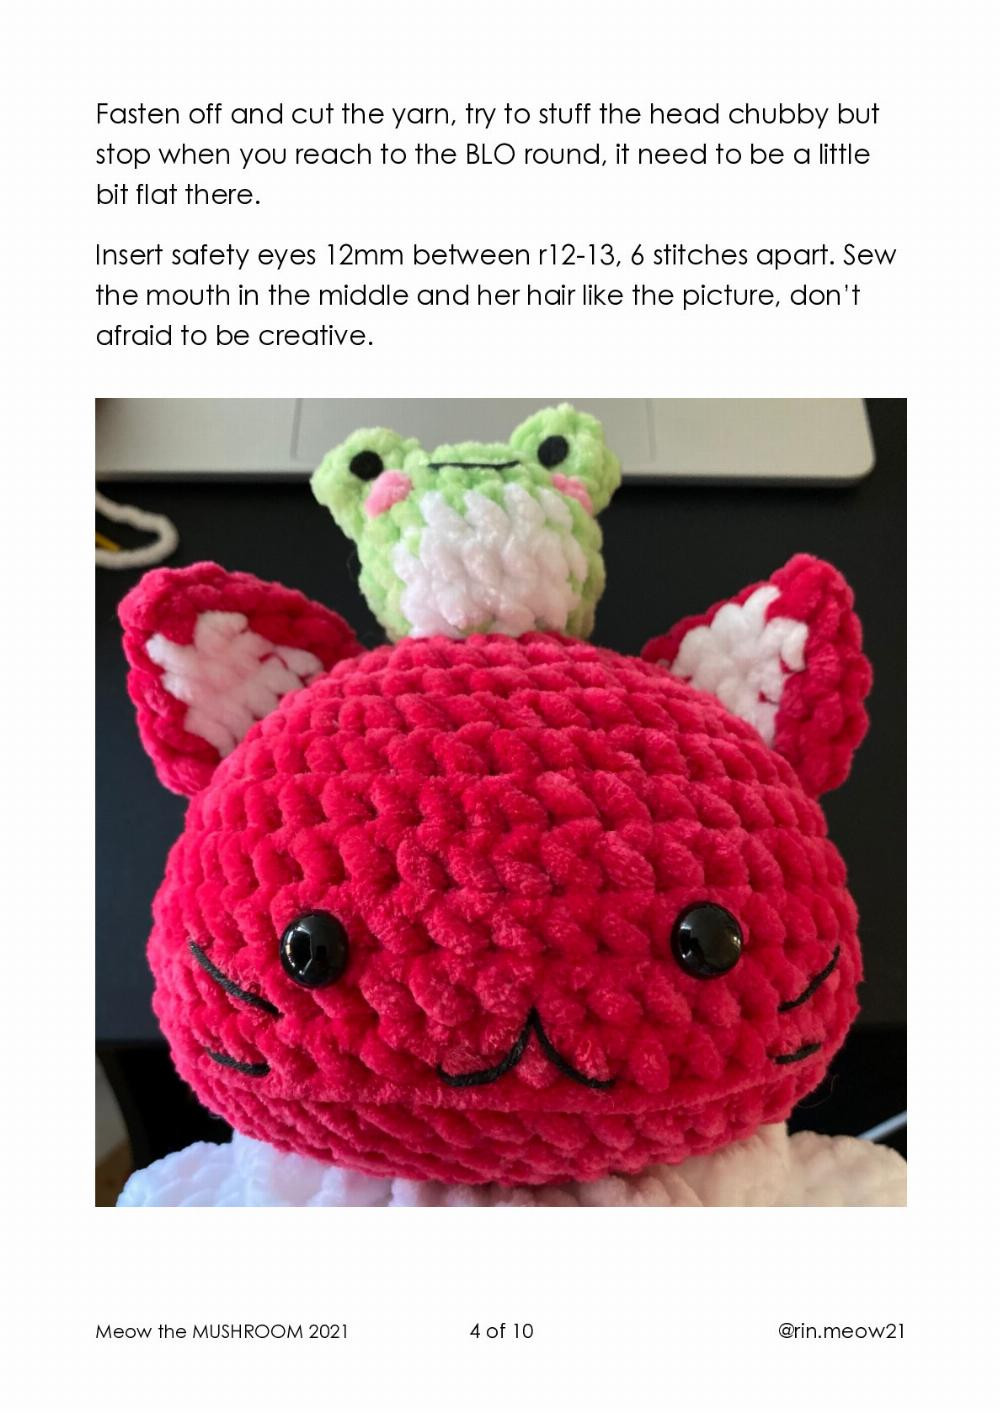 Meow the MUSHROOM crochet pattern